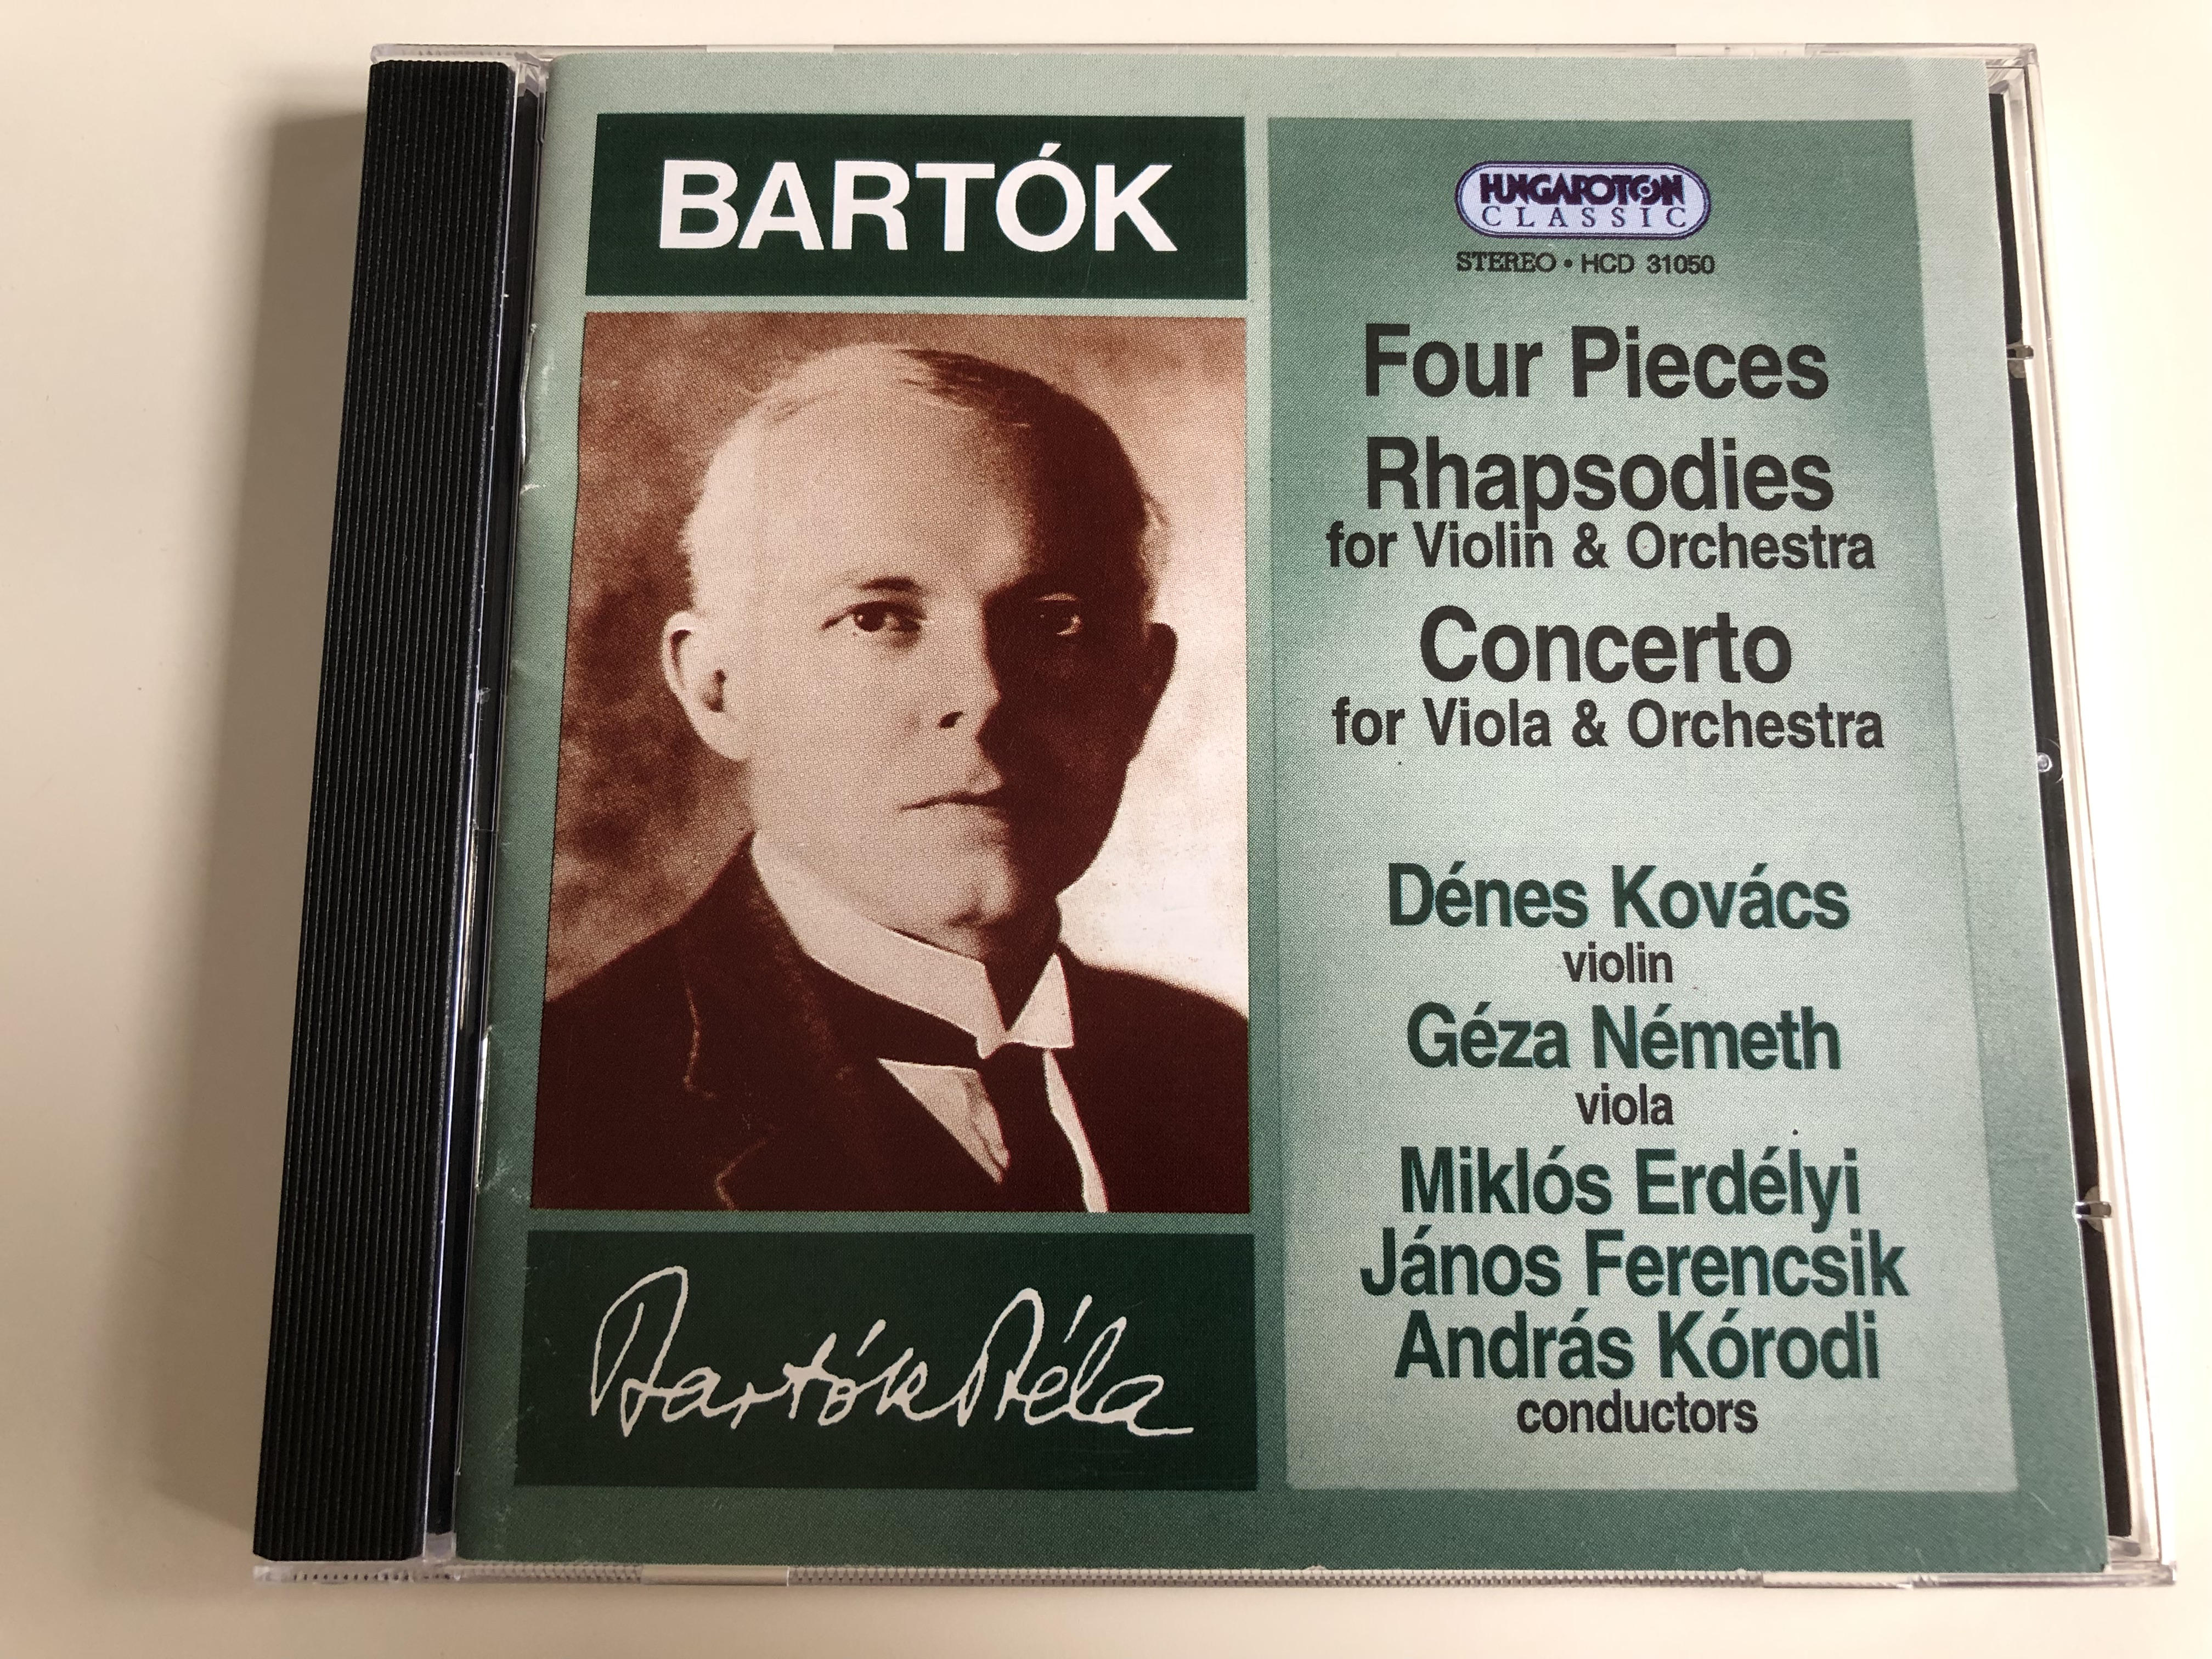 bart-k-four-pieces-rhapsodies-for-violin-orchestra-concerto-for-viola-orchestra-d-nes-kov-cs-violin-g-za-n-meth-viola-conducted-by-mikl-s-erd-lyi-j-nos-ferencsik-andr-s-k-rodi-hungaroton-hcd-31050-audio-cd-1994-1-.jpg